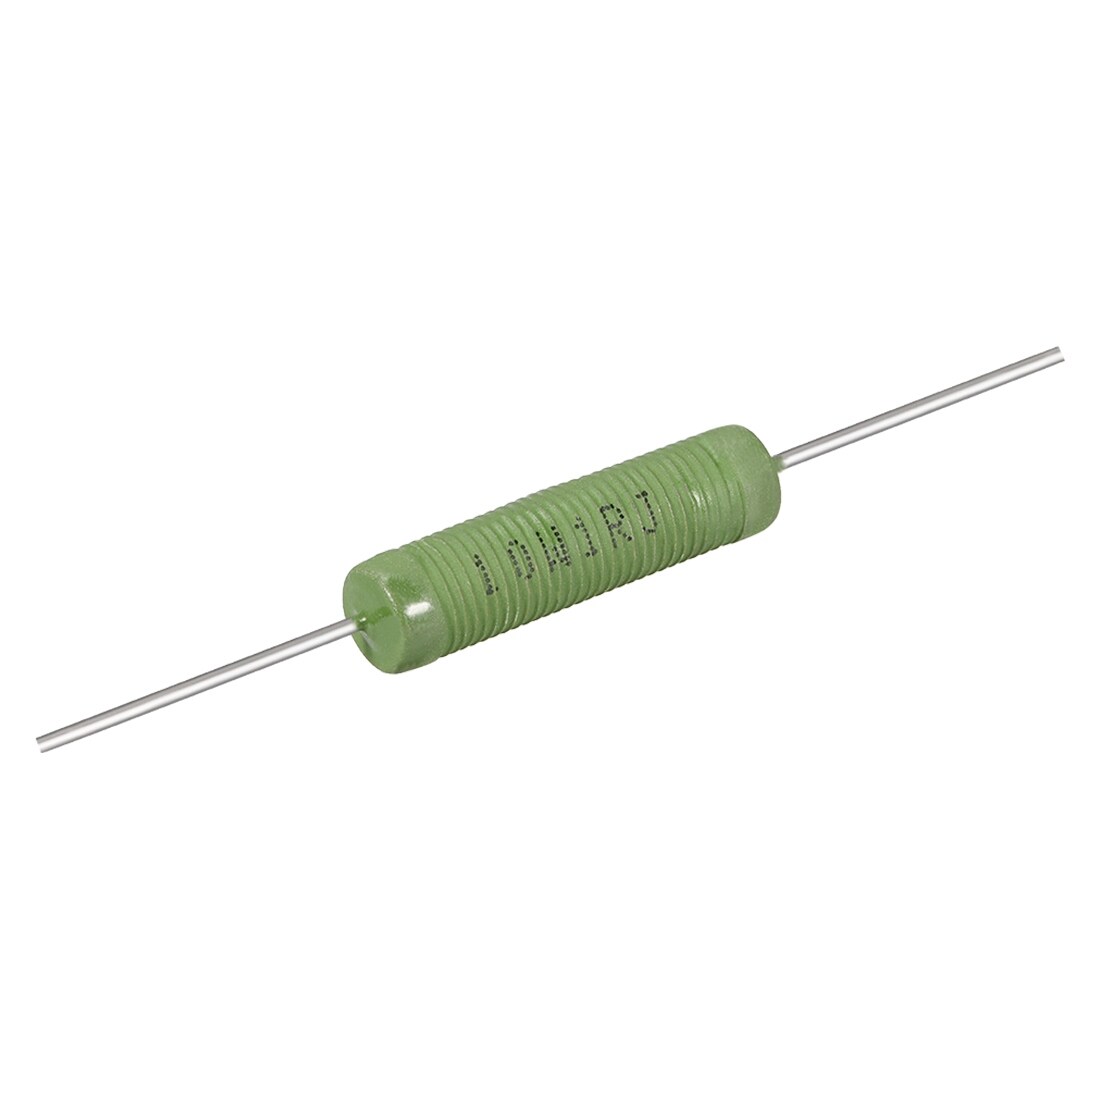 /-5% Tolerance 2Pcs 10W 3K Ohm Wire Wound Tubular Resistor Tube-Type Fixed